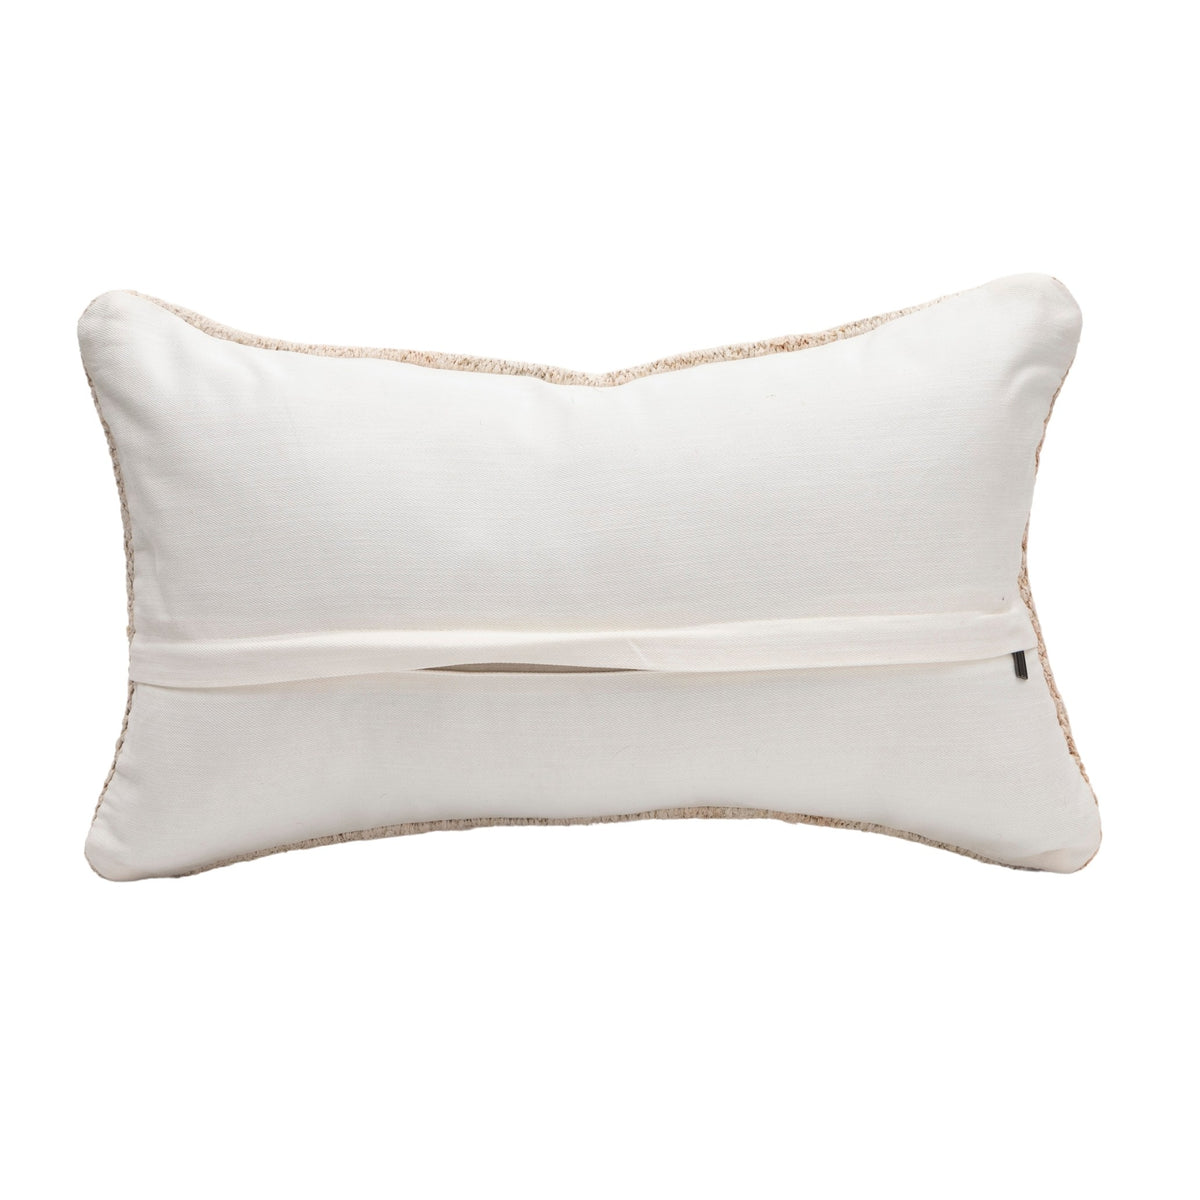 Neutral Handwoven Kilim Throw Pillow Cover 12" x 20"